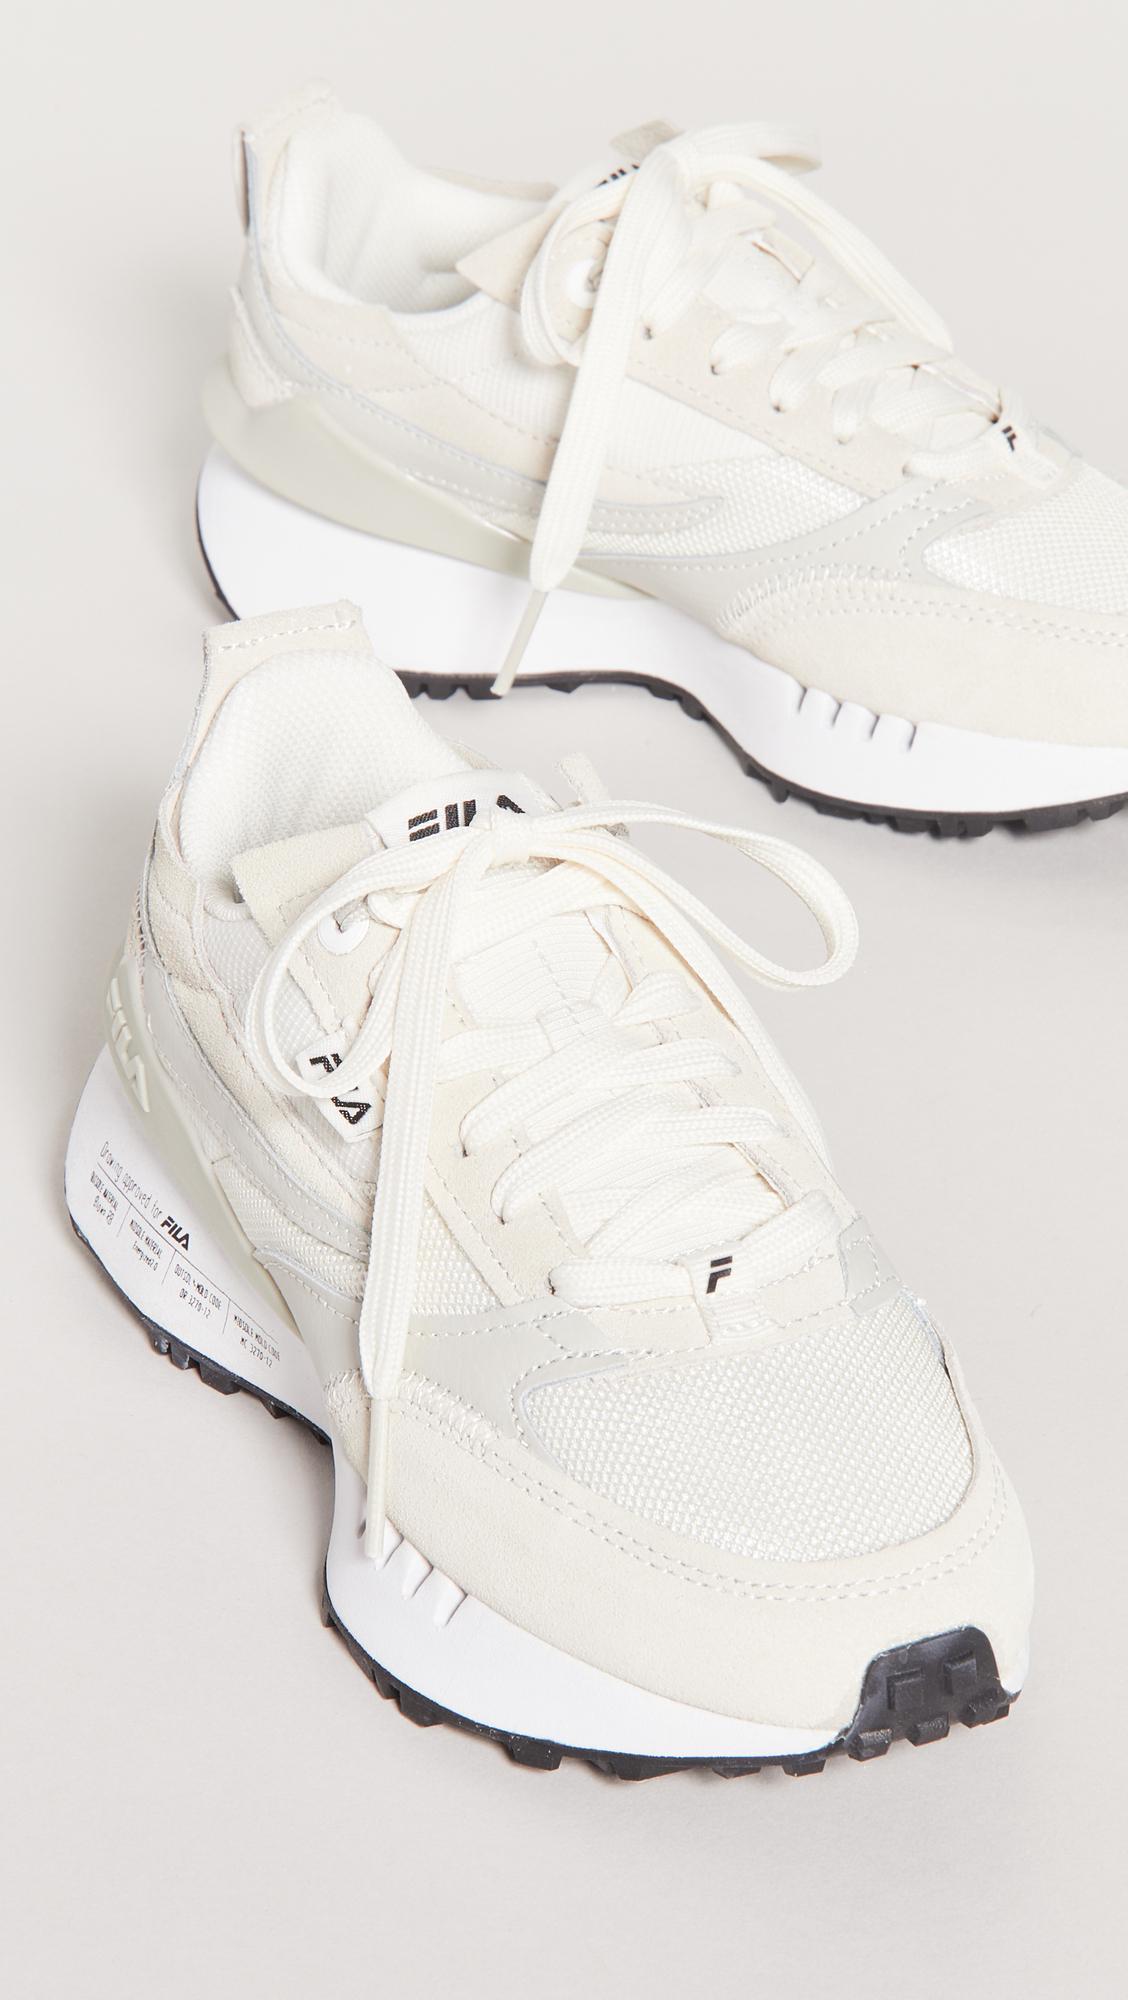 Fila Renno N Generation Sneakers in White | Lyst